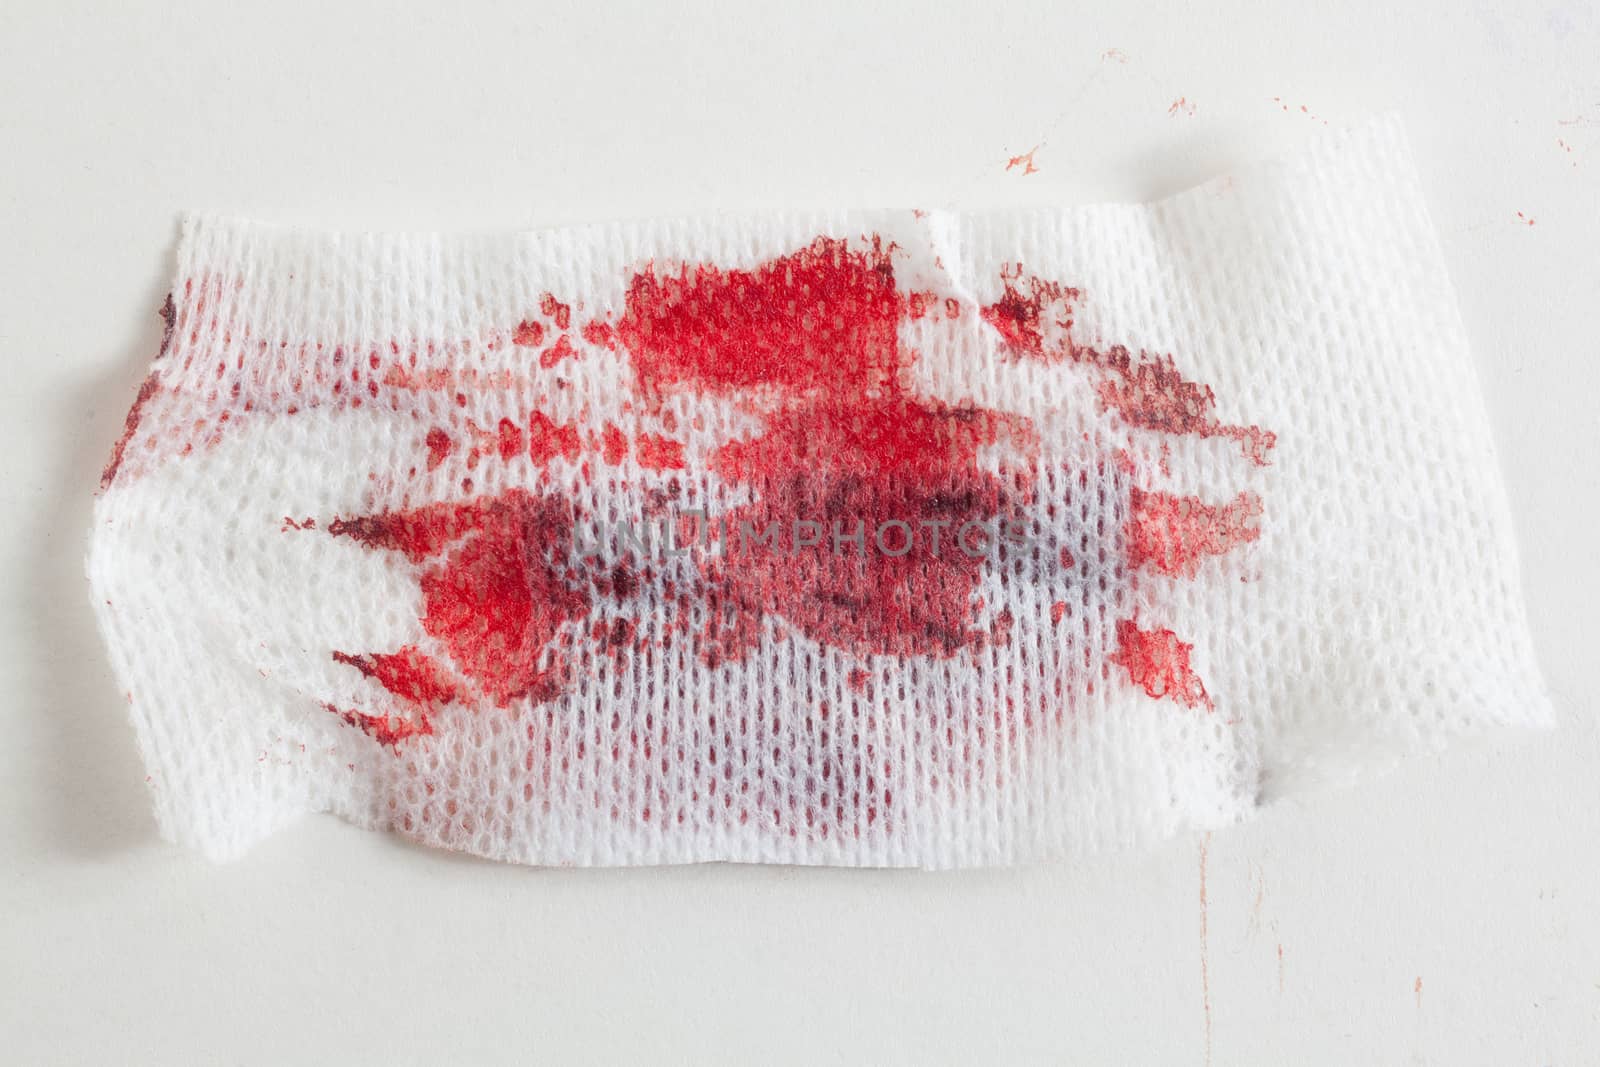 Gauze with blood on white background